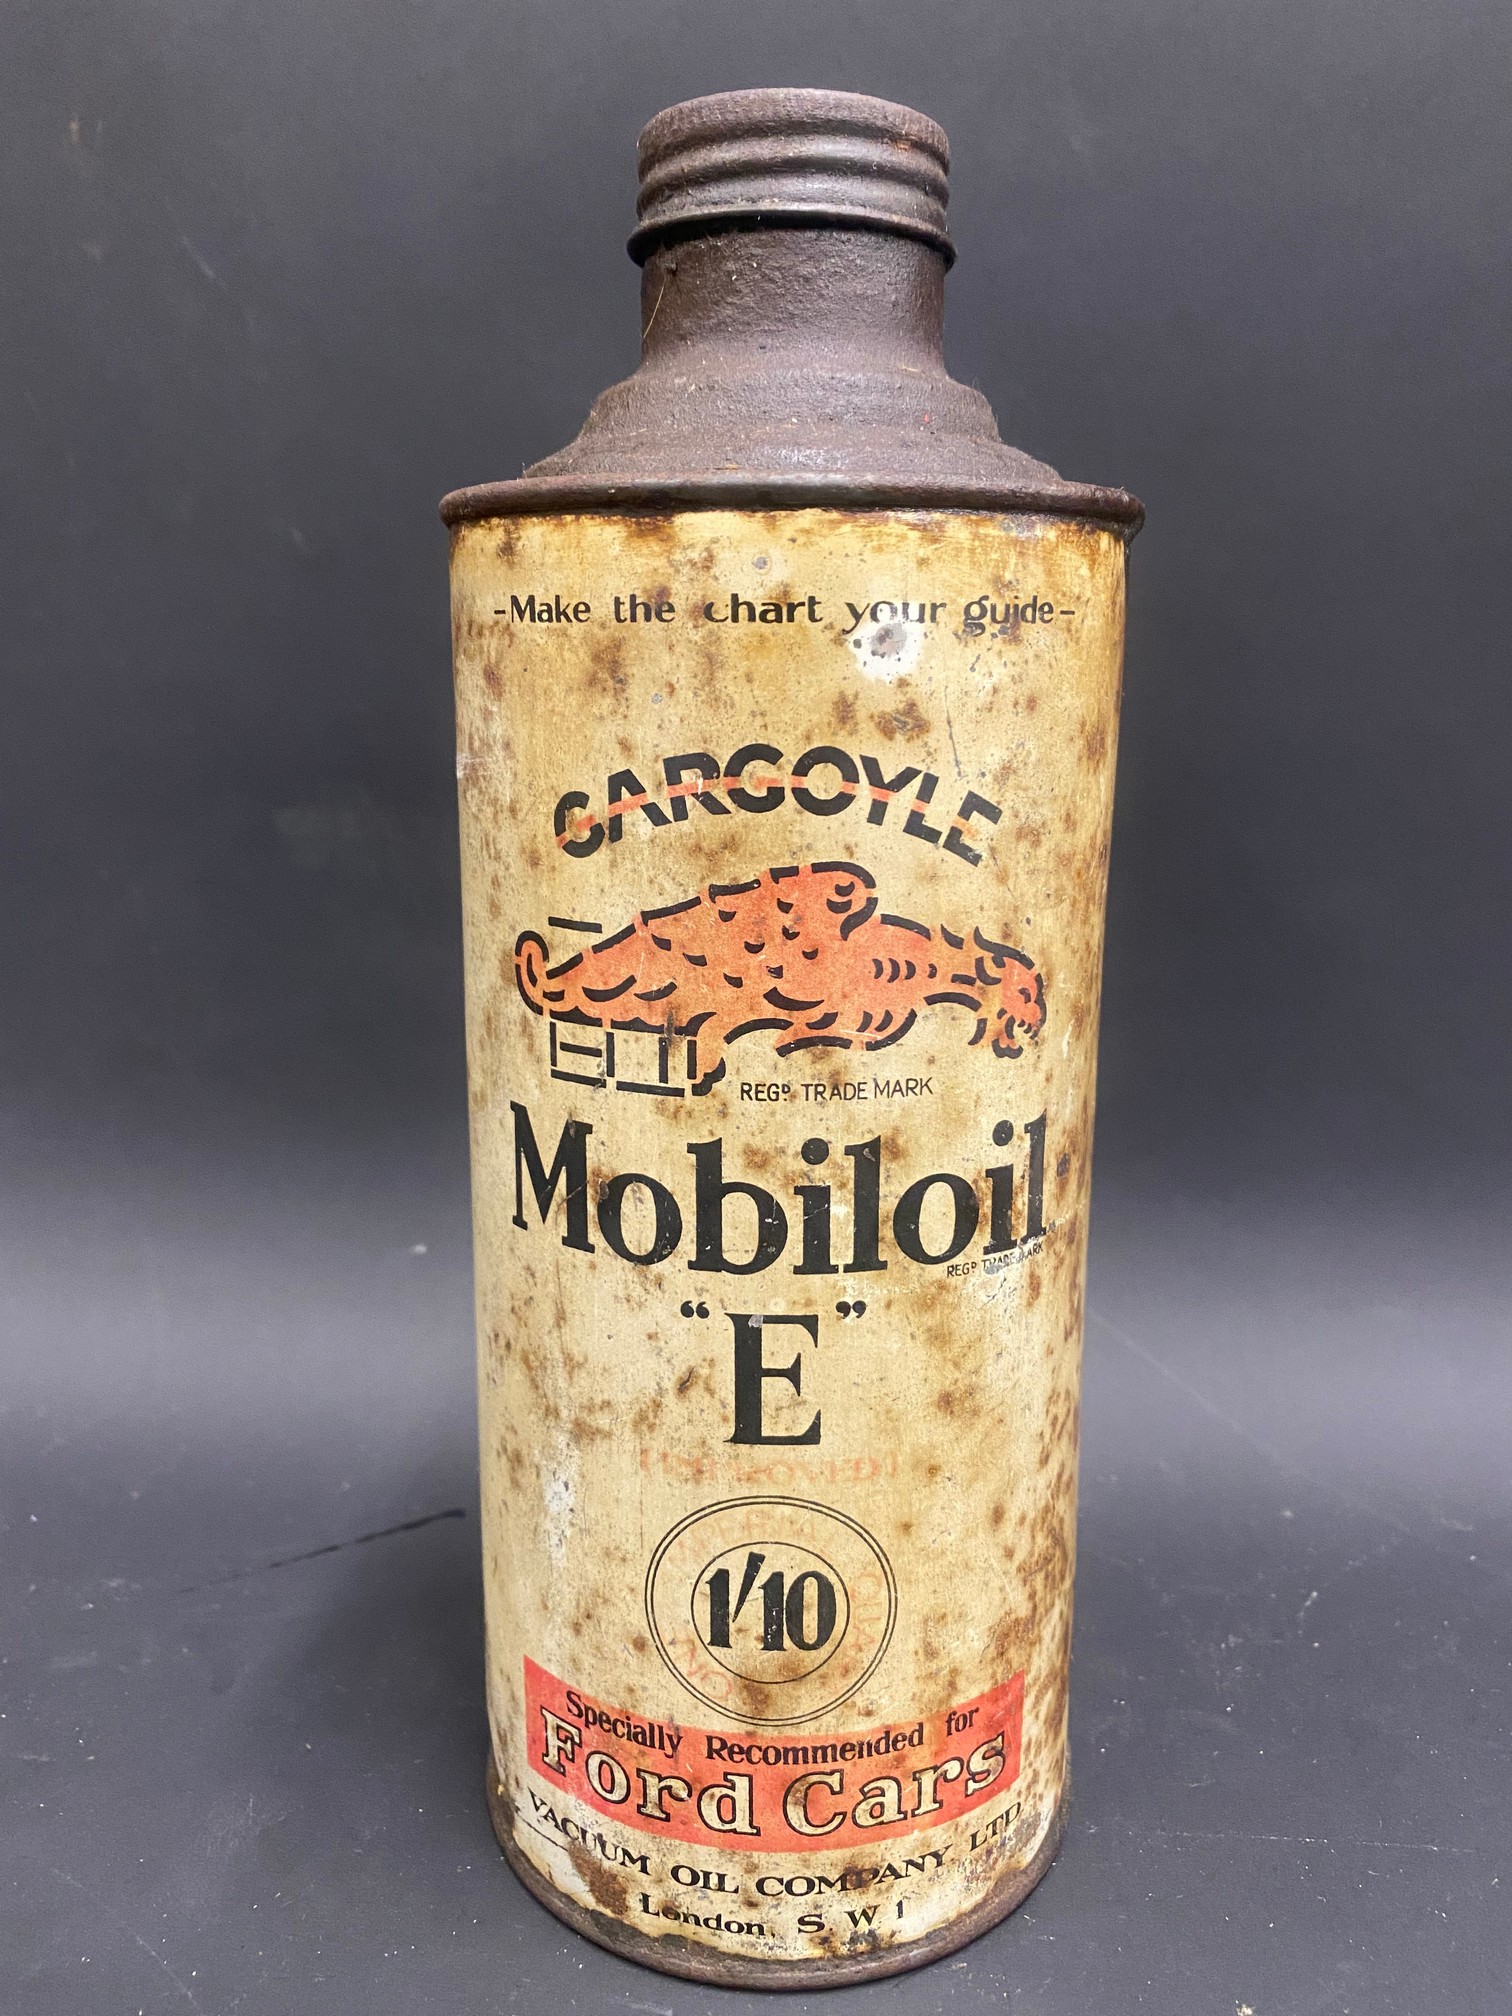 A Gargoyle Mobiloil 'E' Grade for Ford Cars quart cylindrical oil can.